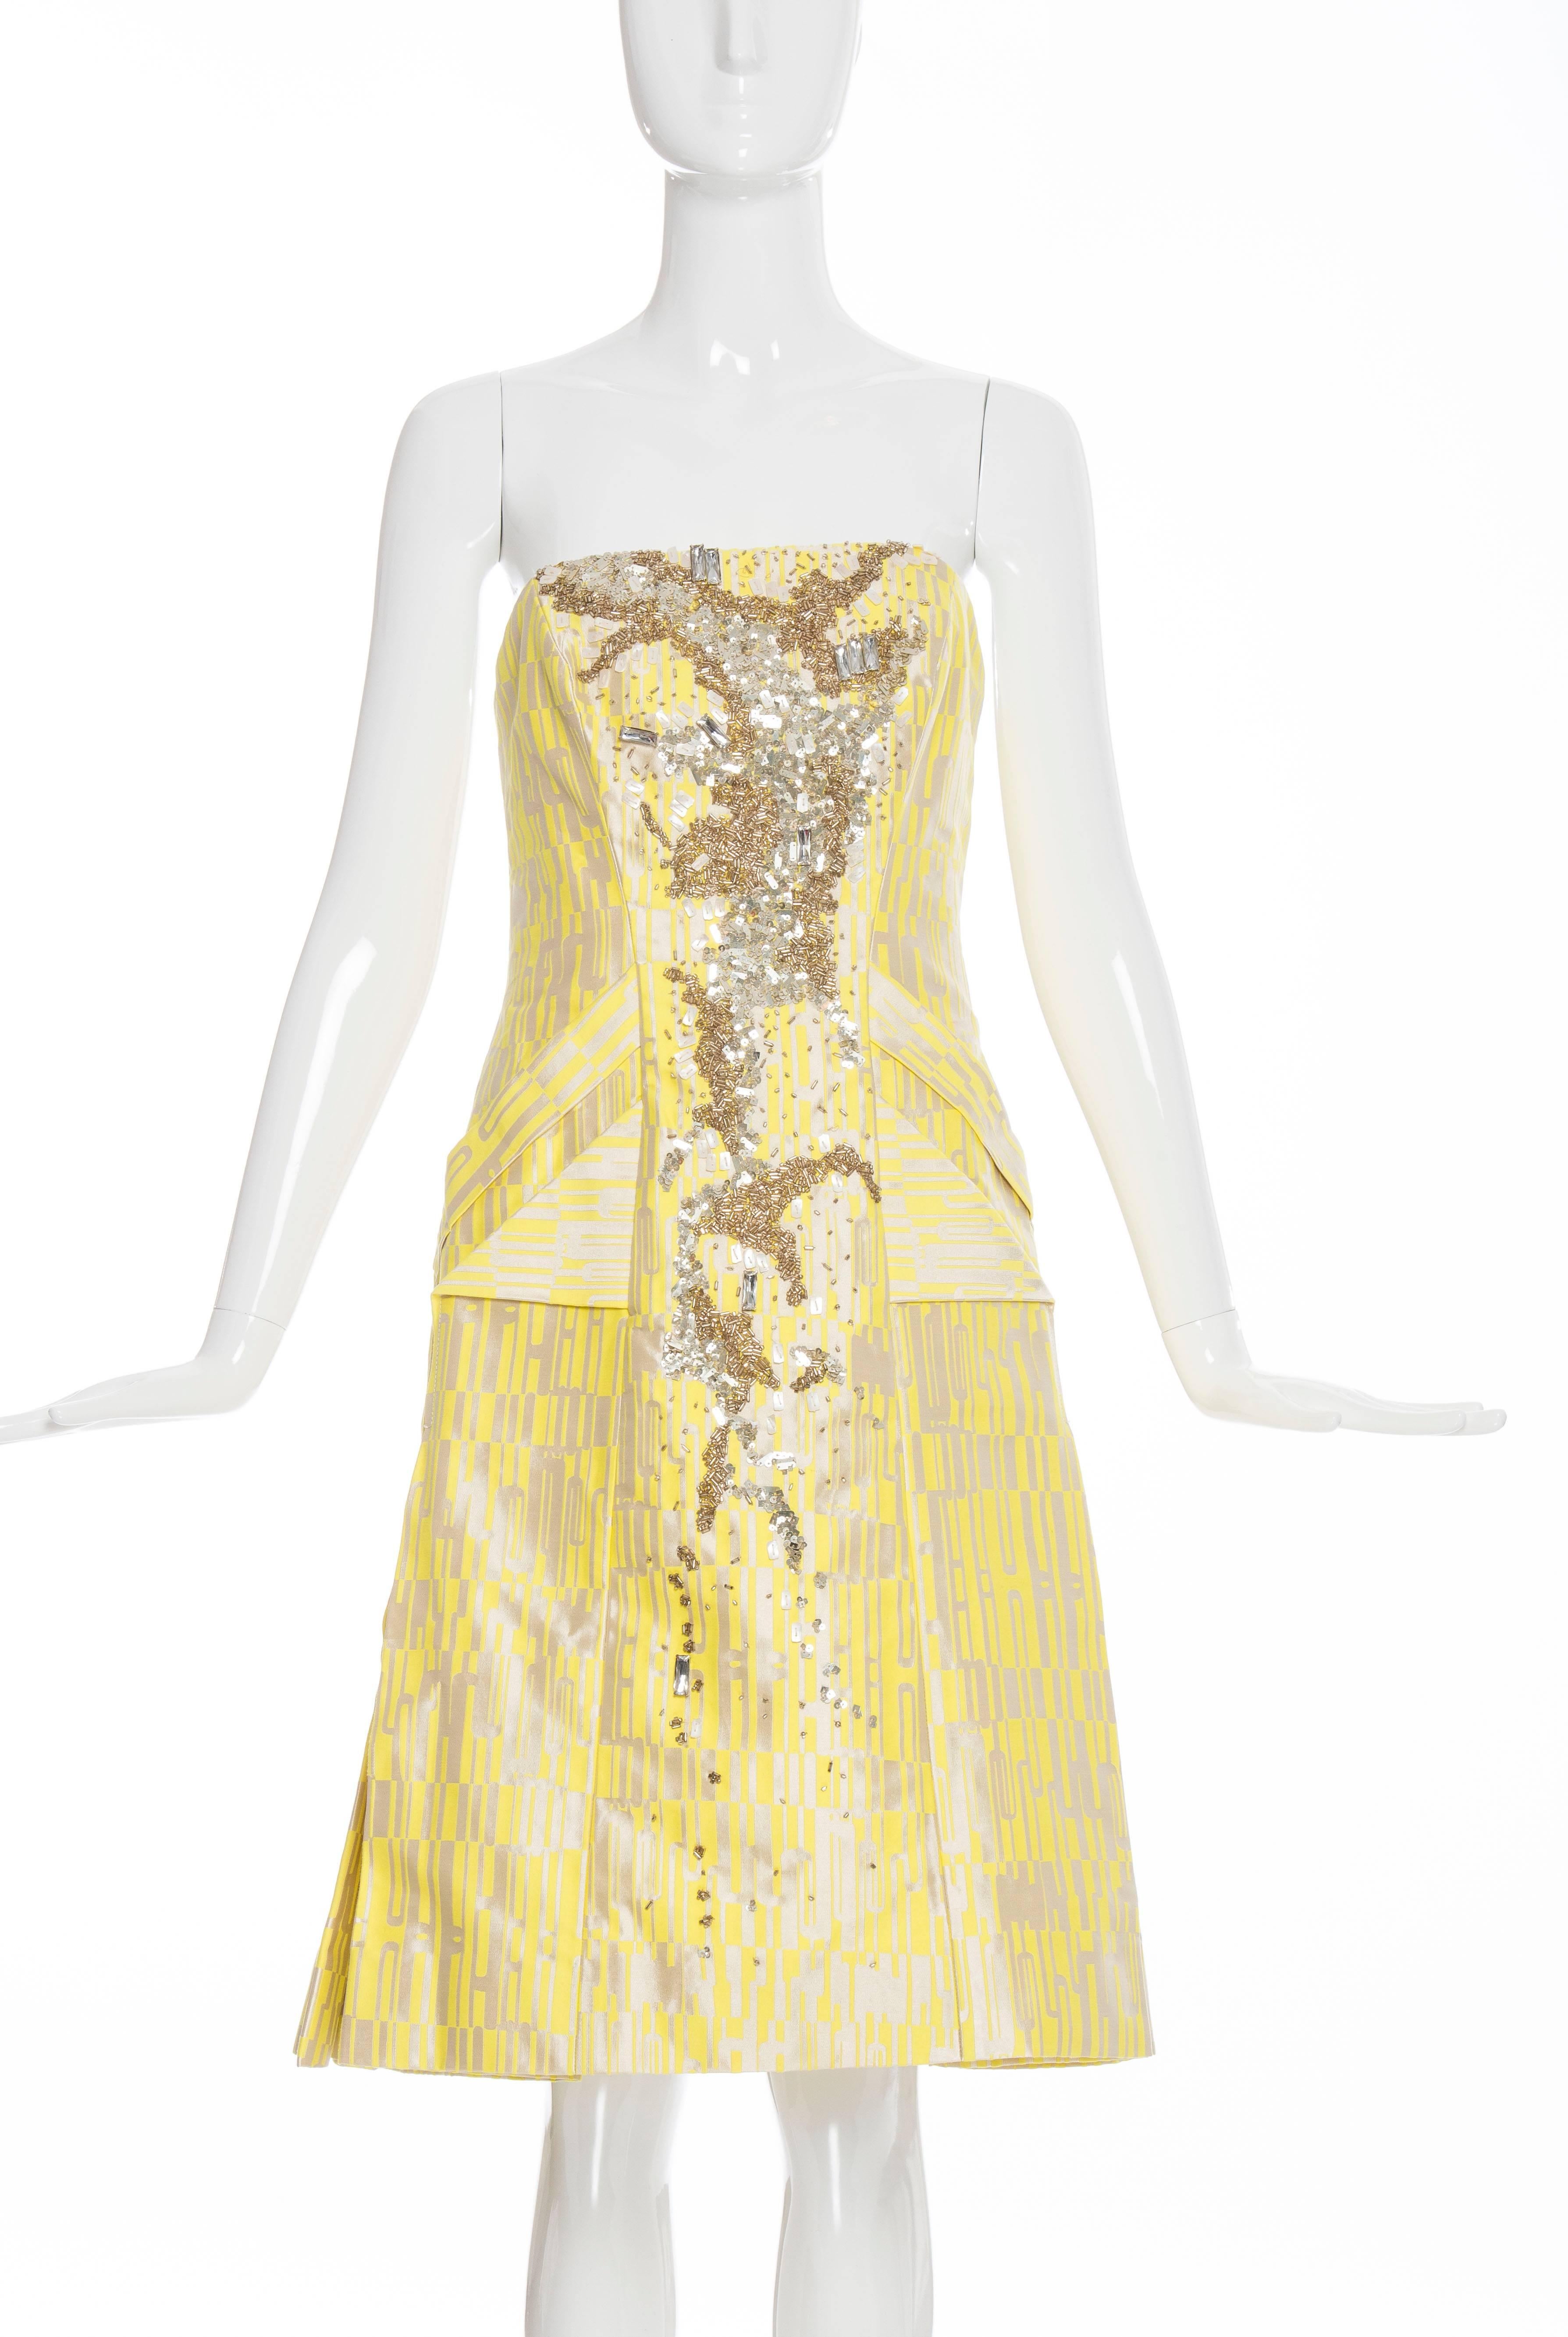 Women's Carolina Herrera Strapless Dress Spring 2012 For Sale